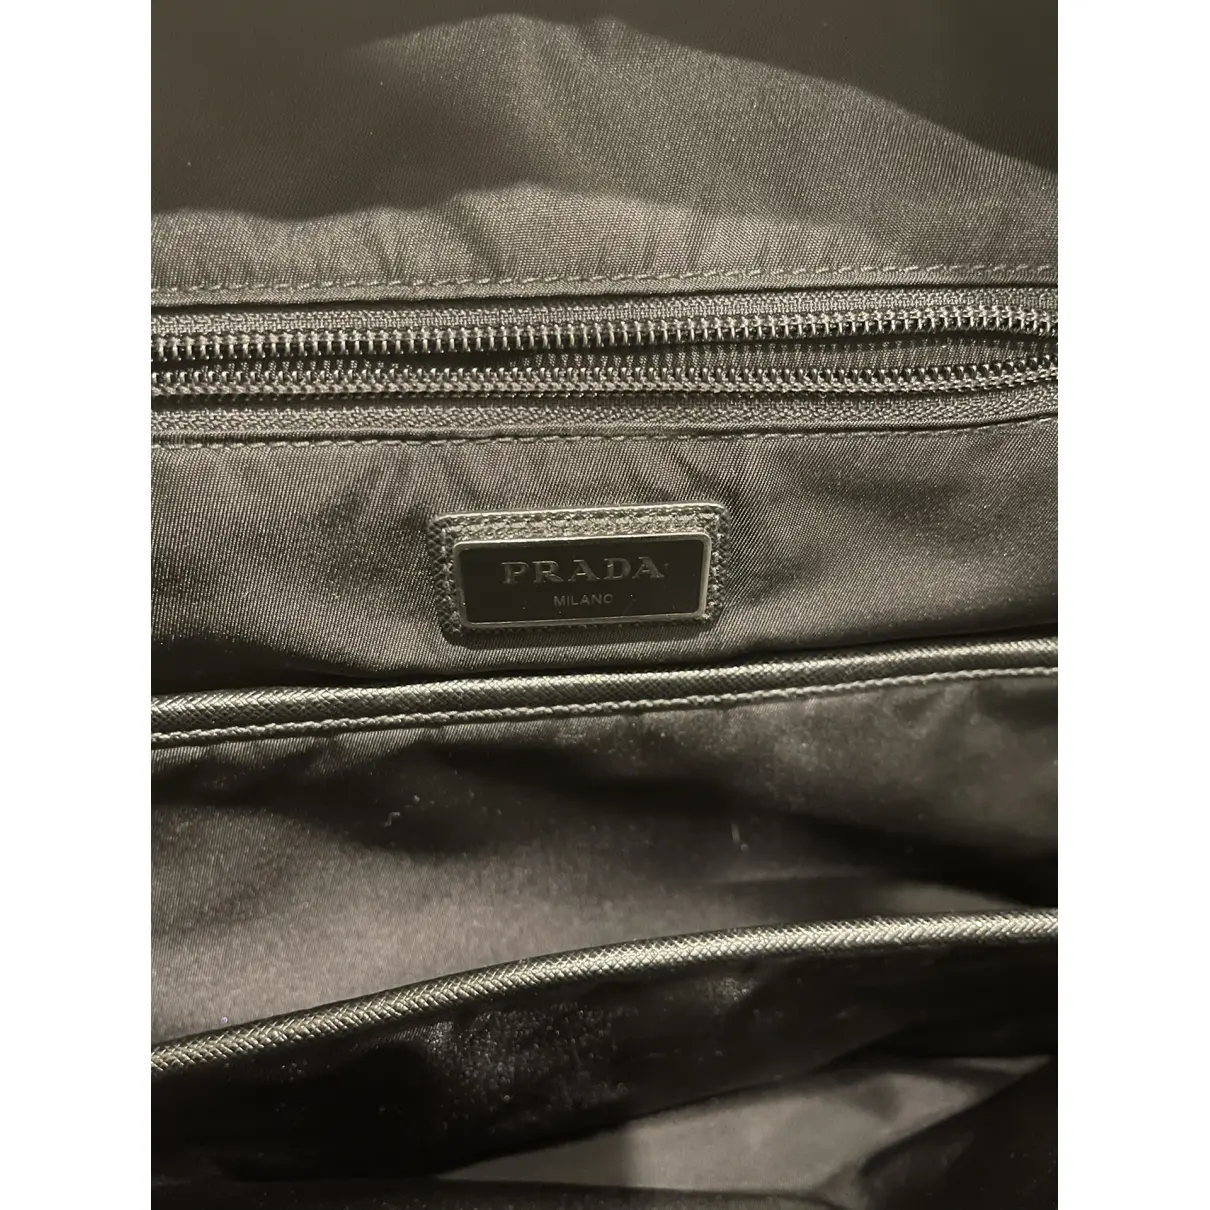 Buy Prada Cloth travel bag online